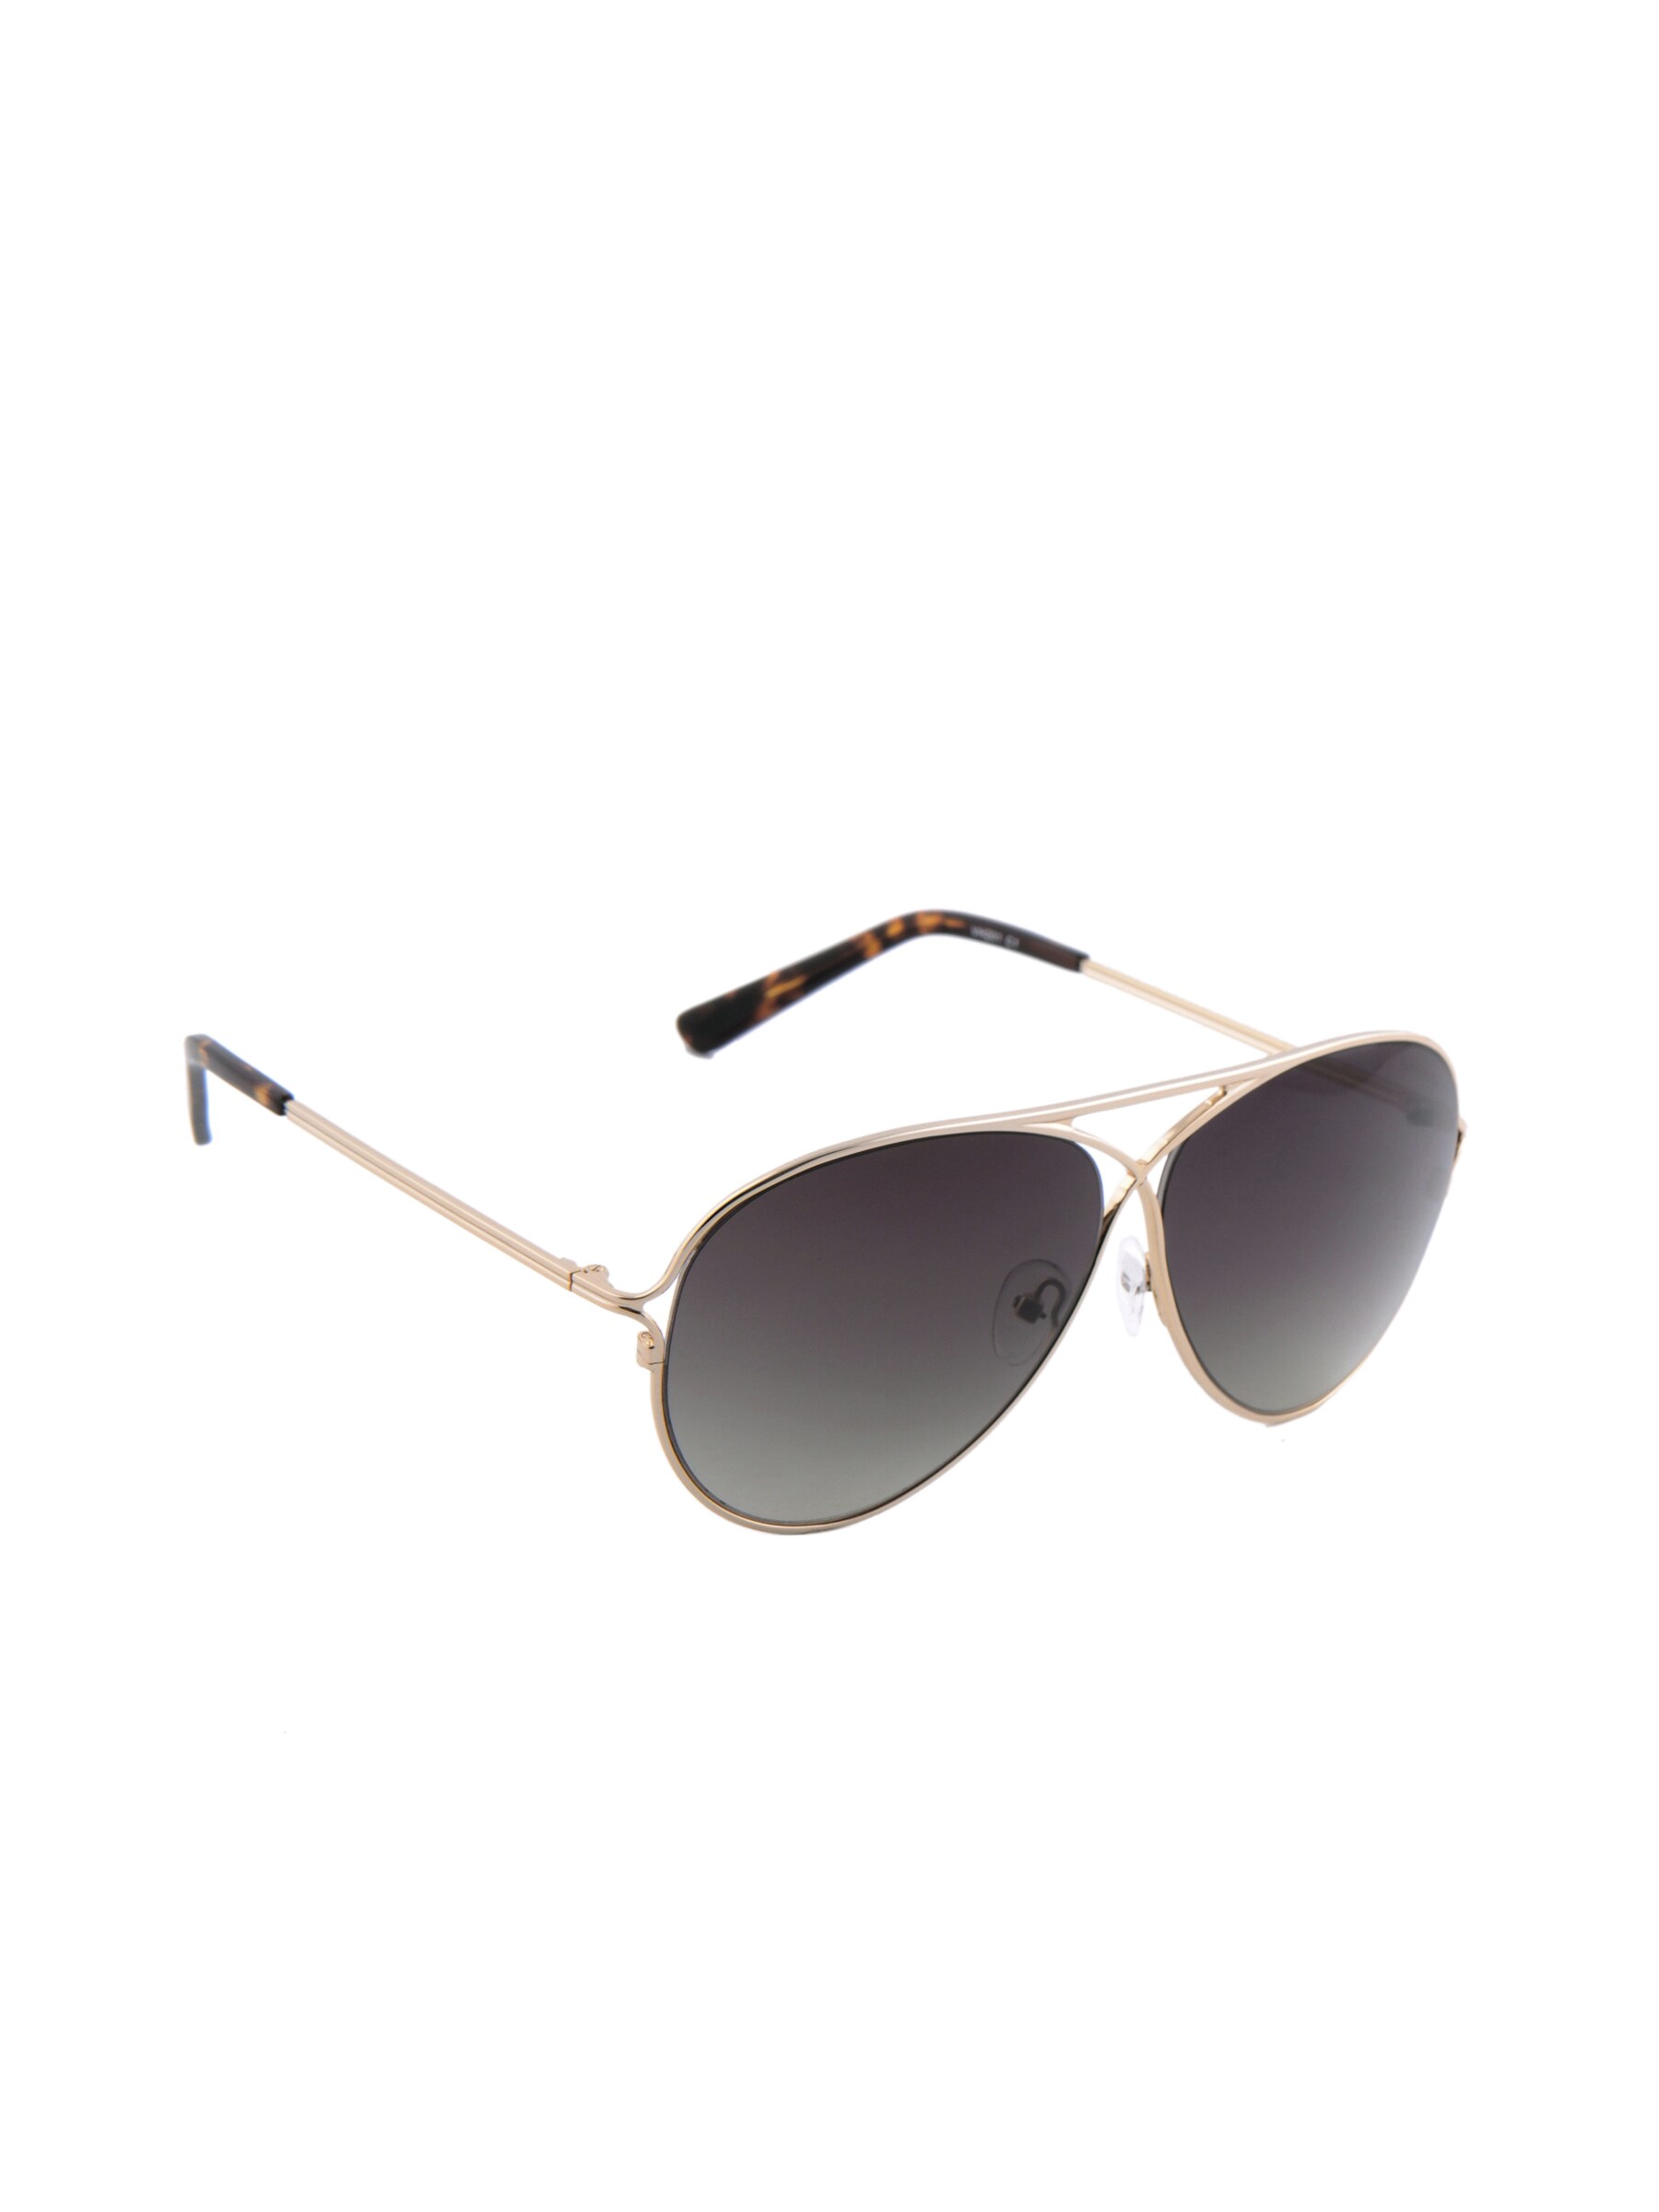 Van Heusen Women Casual Gold Frame Sunglasses